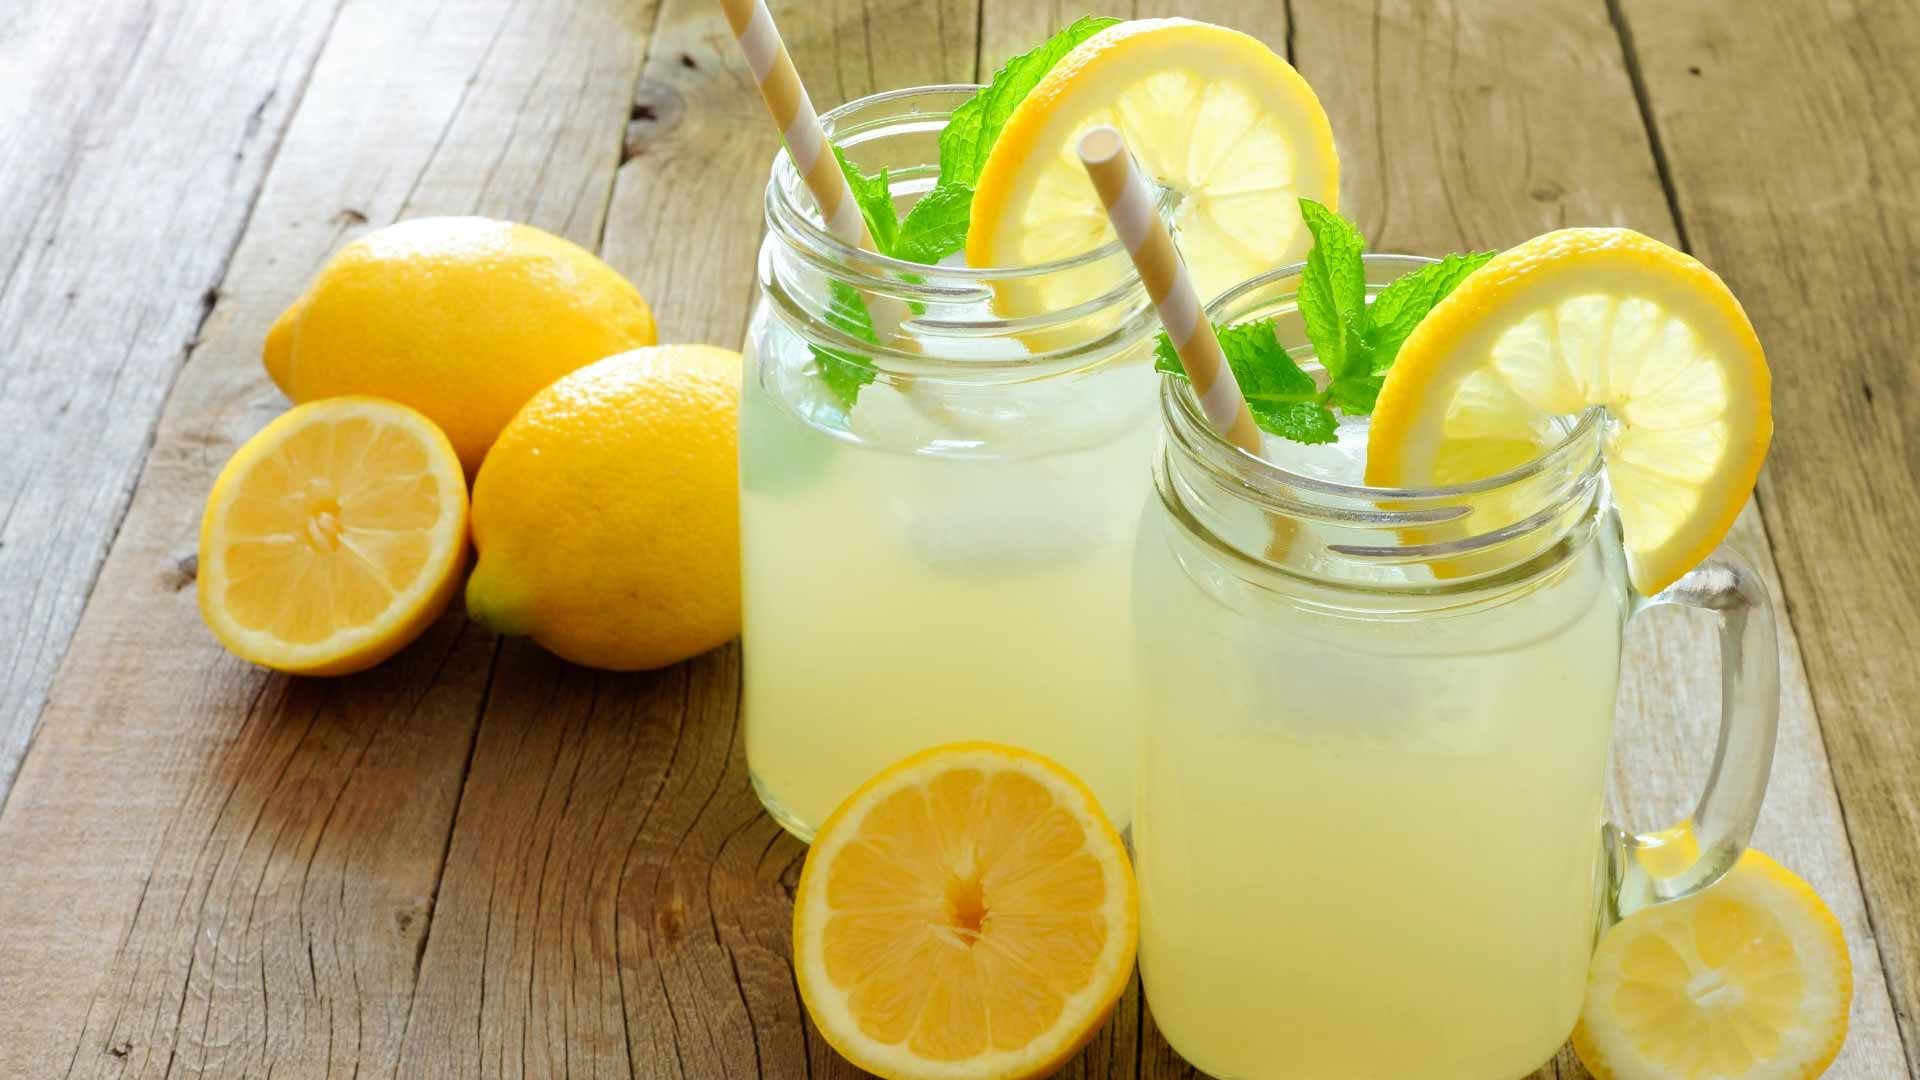 make lemonade out of lemons